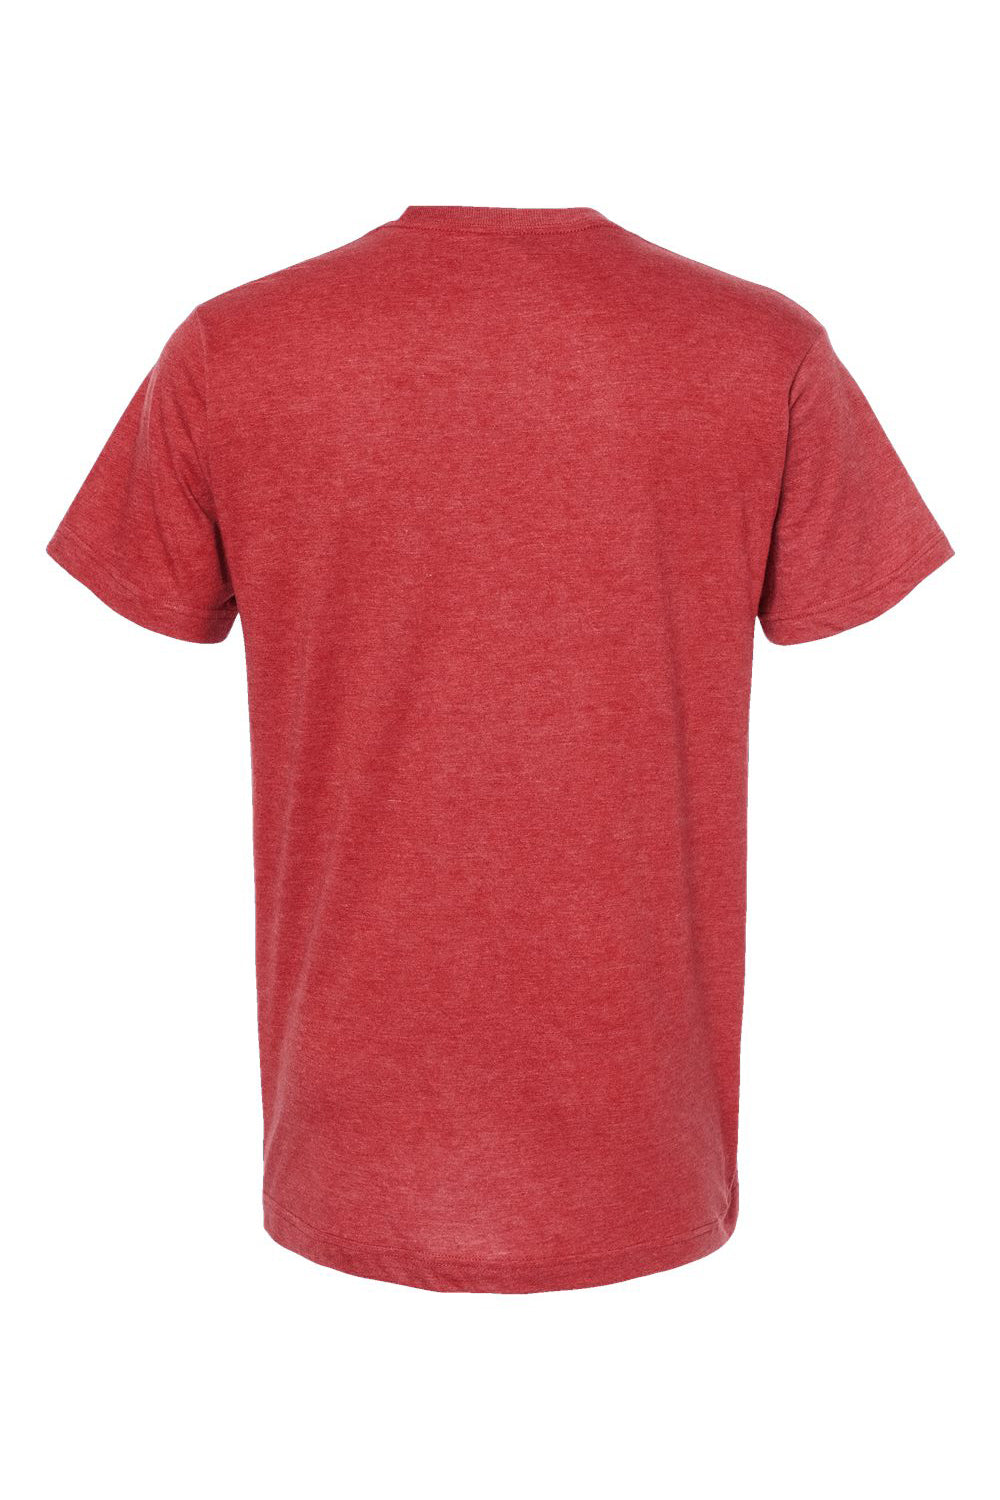 Tultex 202 Mens Fine Jersey Short Sleeve Crewneck T-Shirt Heather Red Flat Back